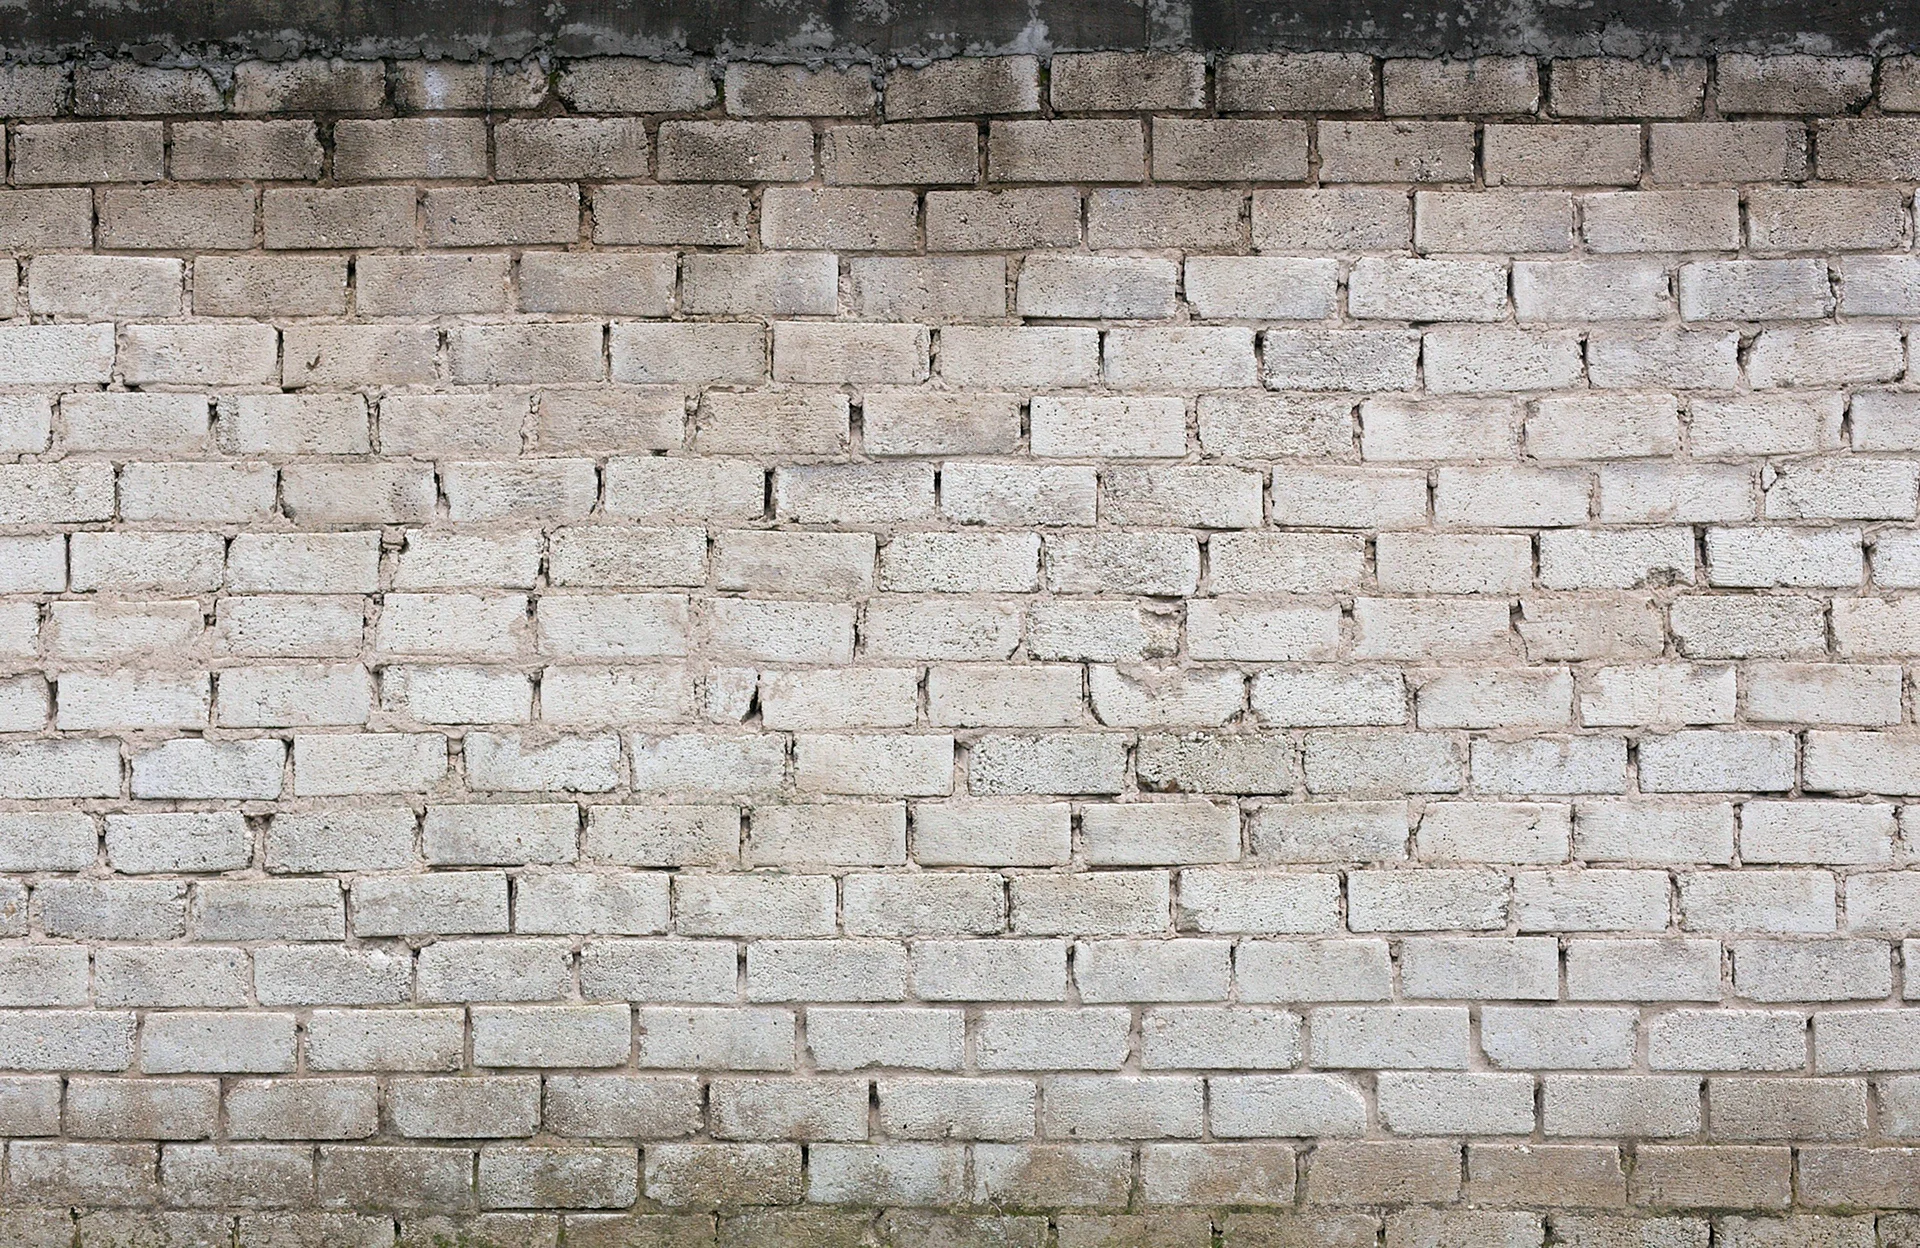 Старая белая кирпичная стена